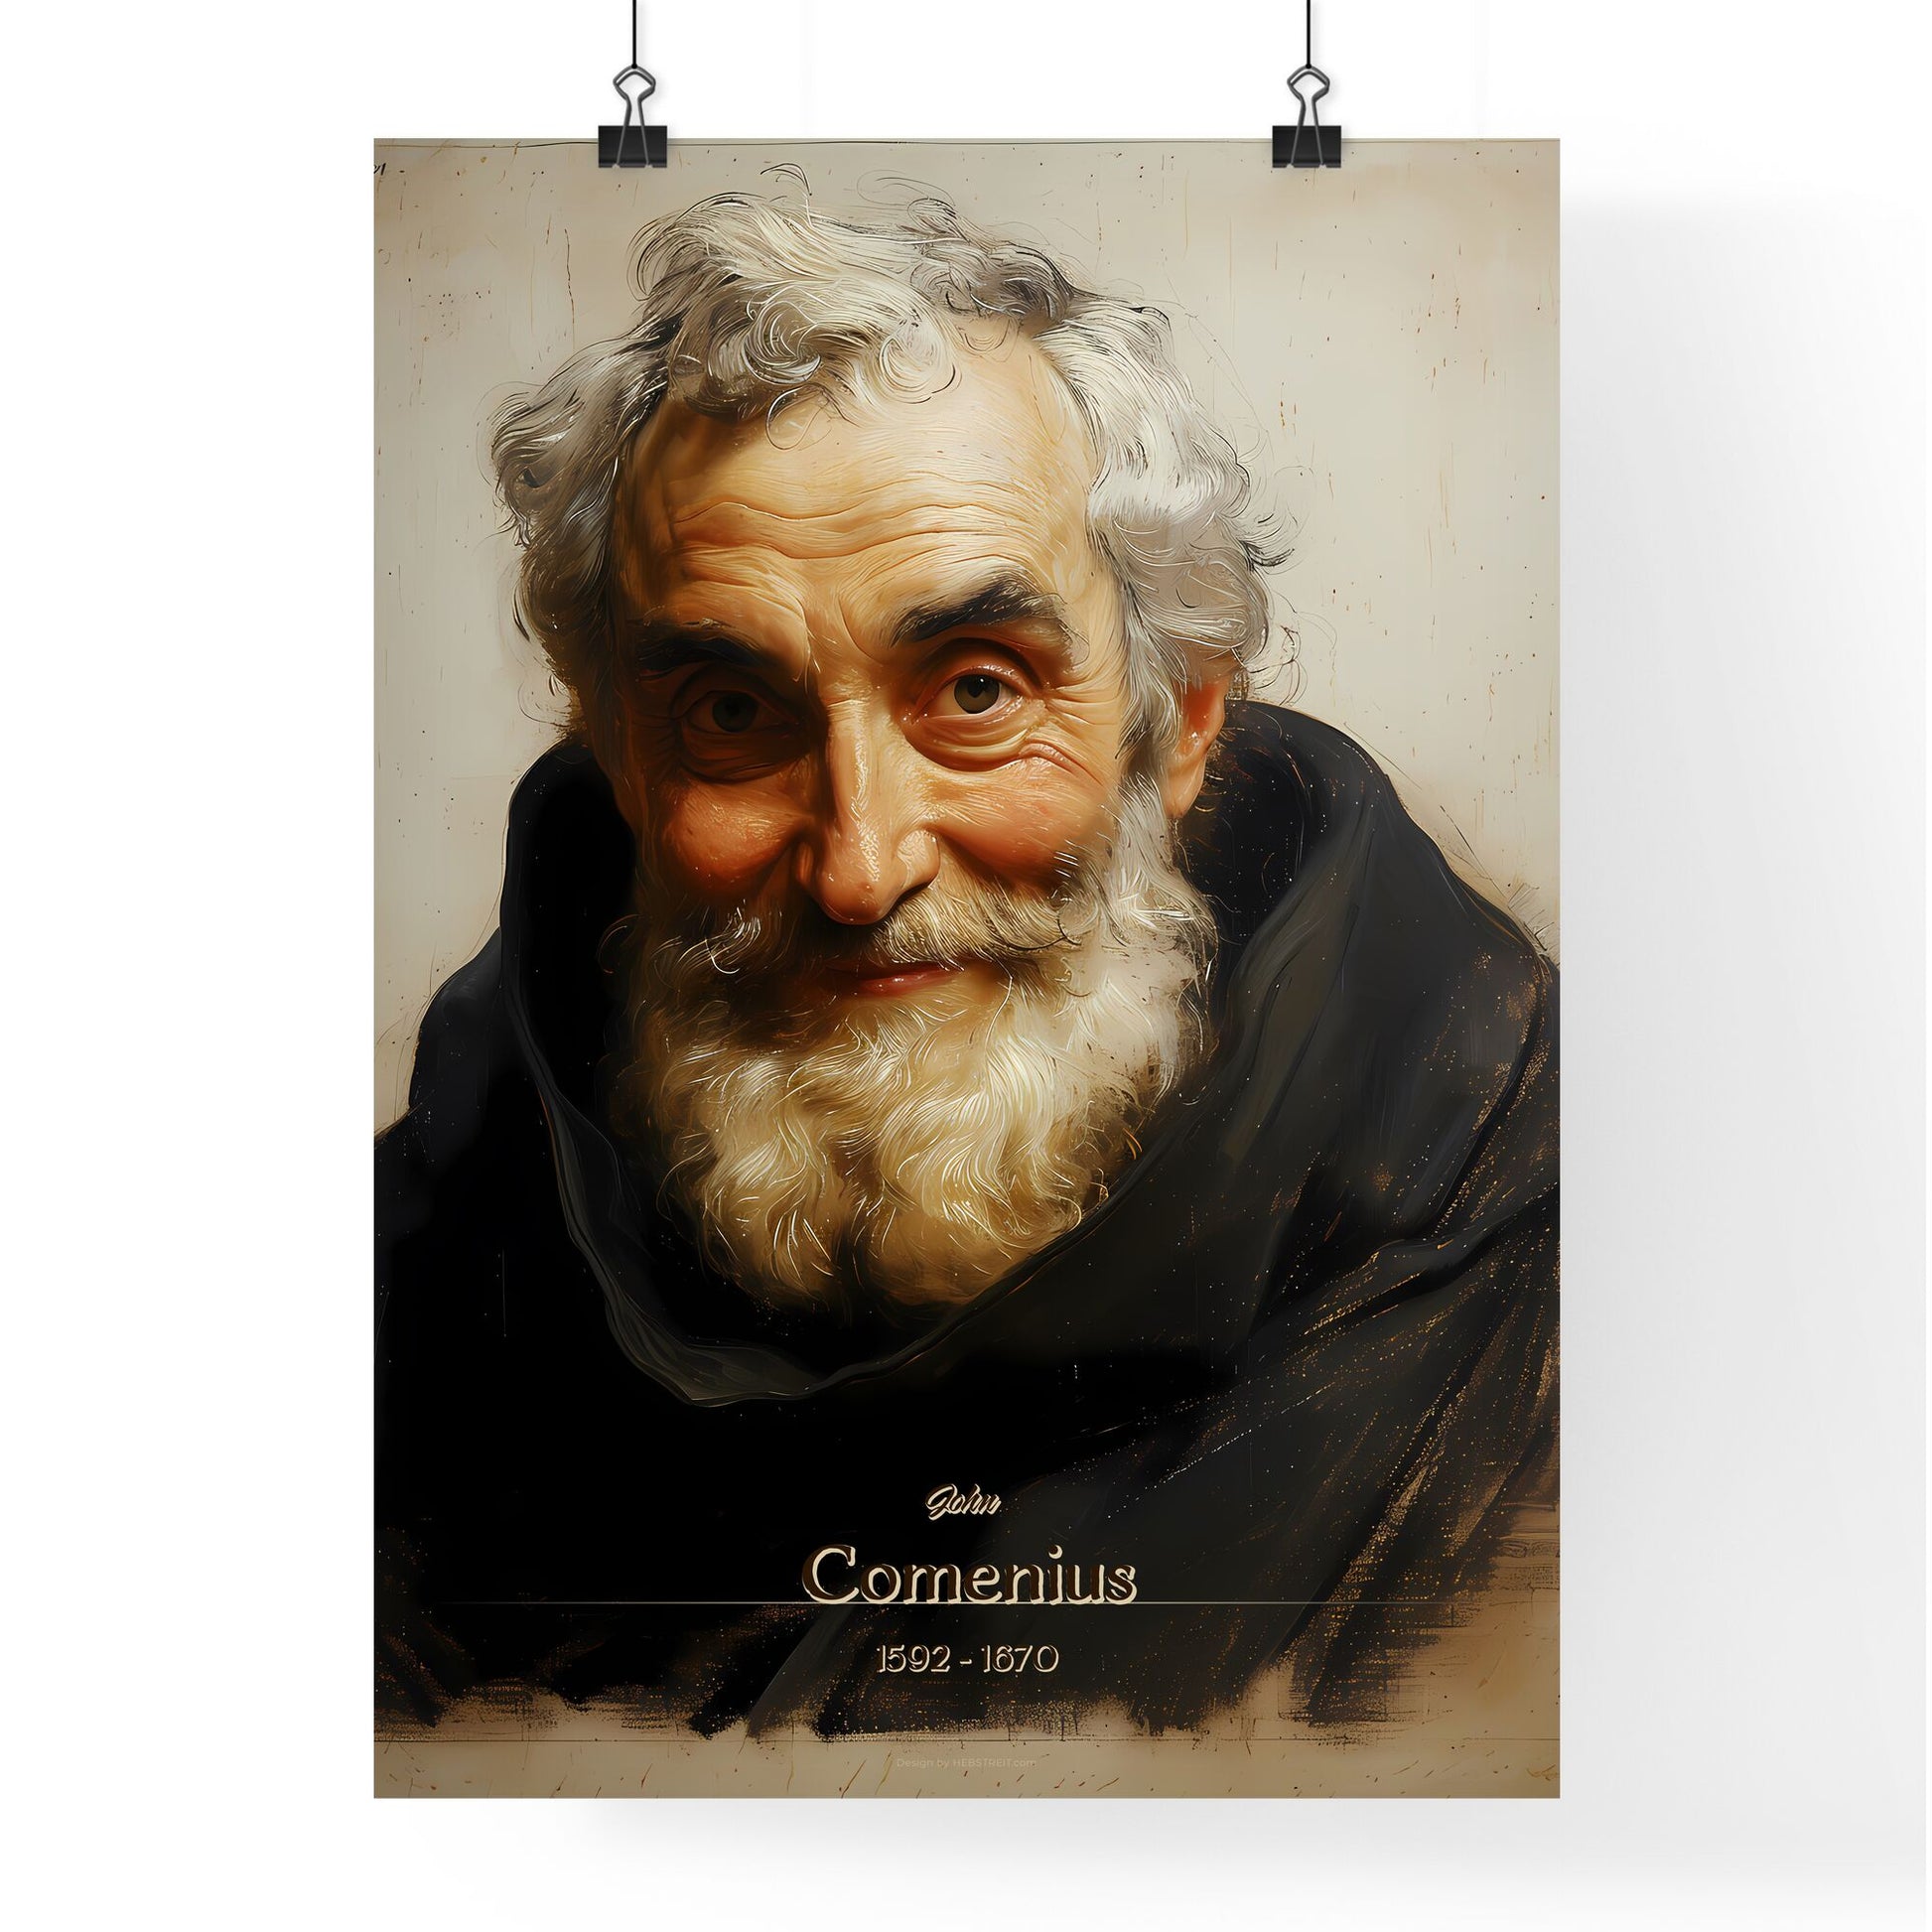 John, Comenius, 1592 - 1670, A Poster of a man with a beard Default Title